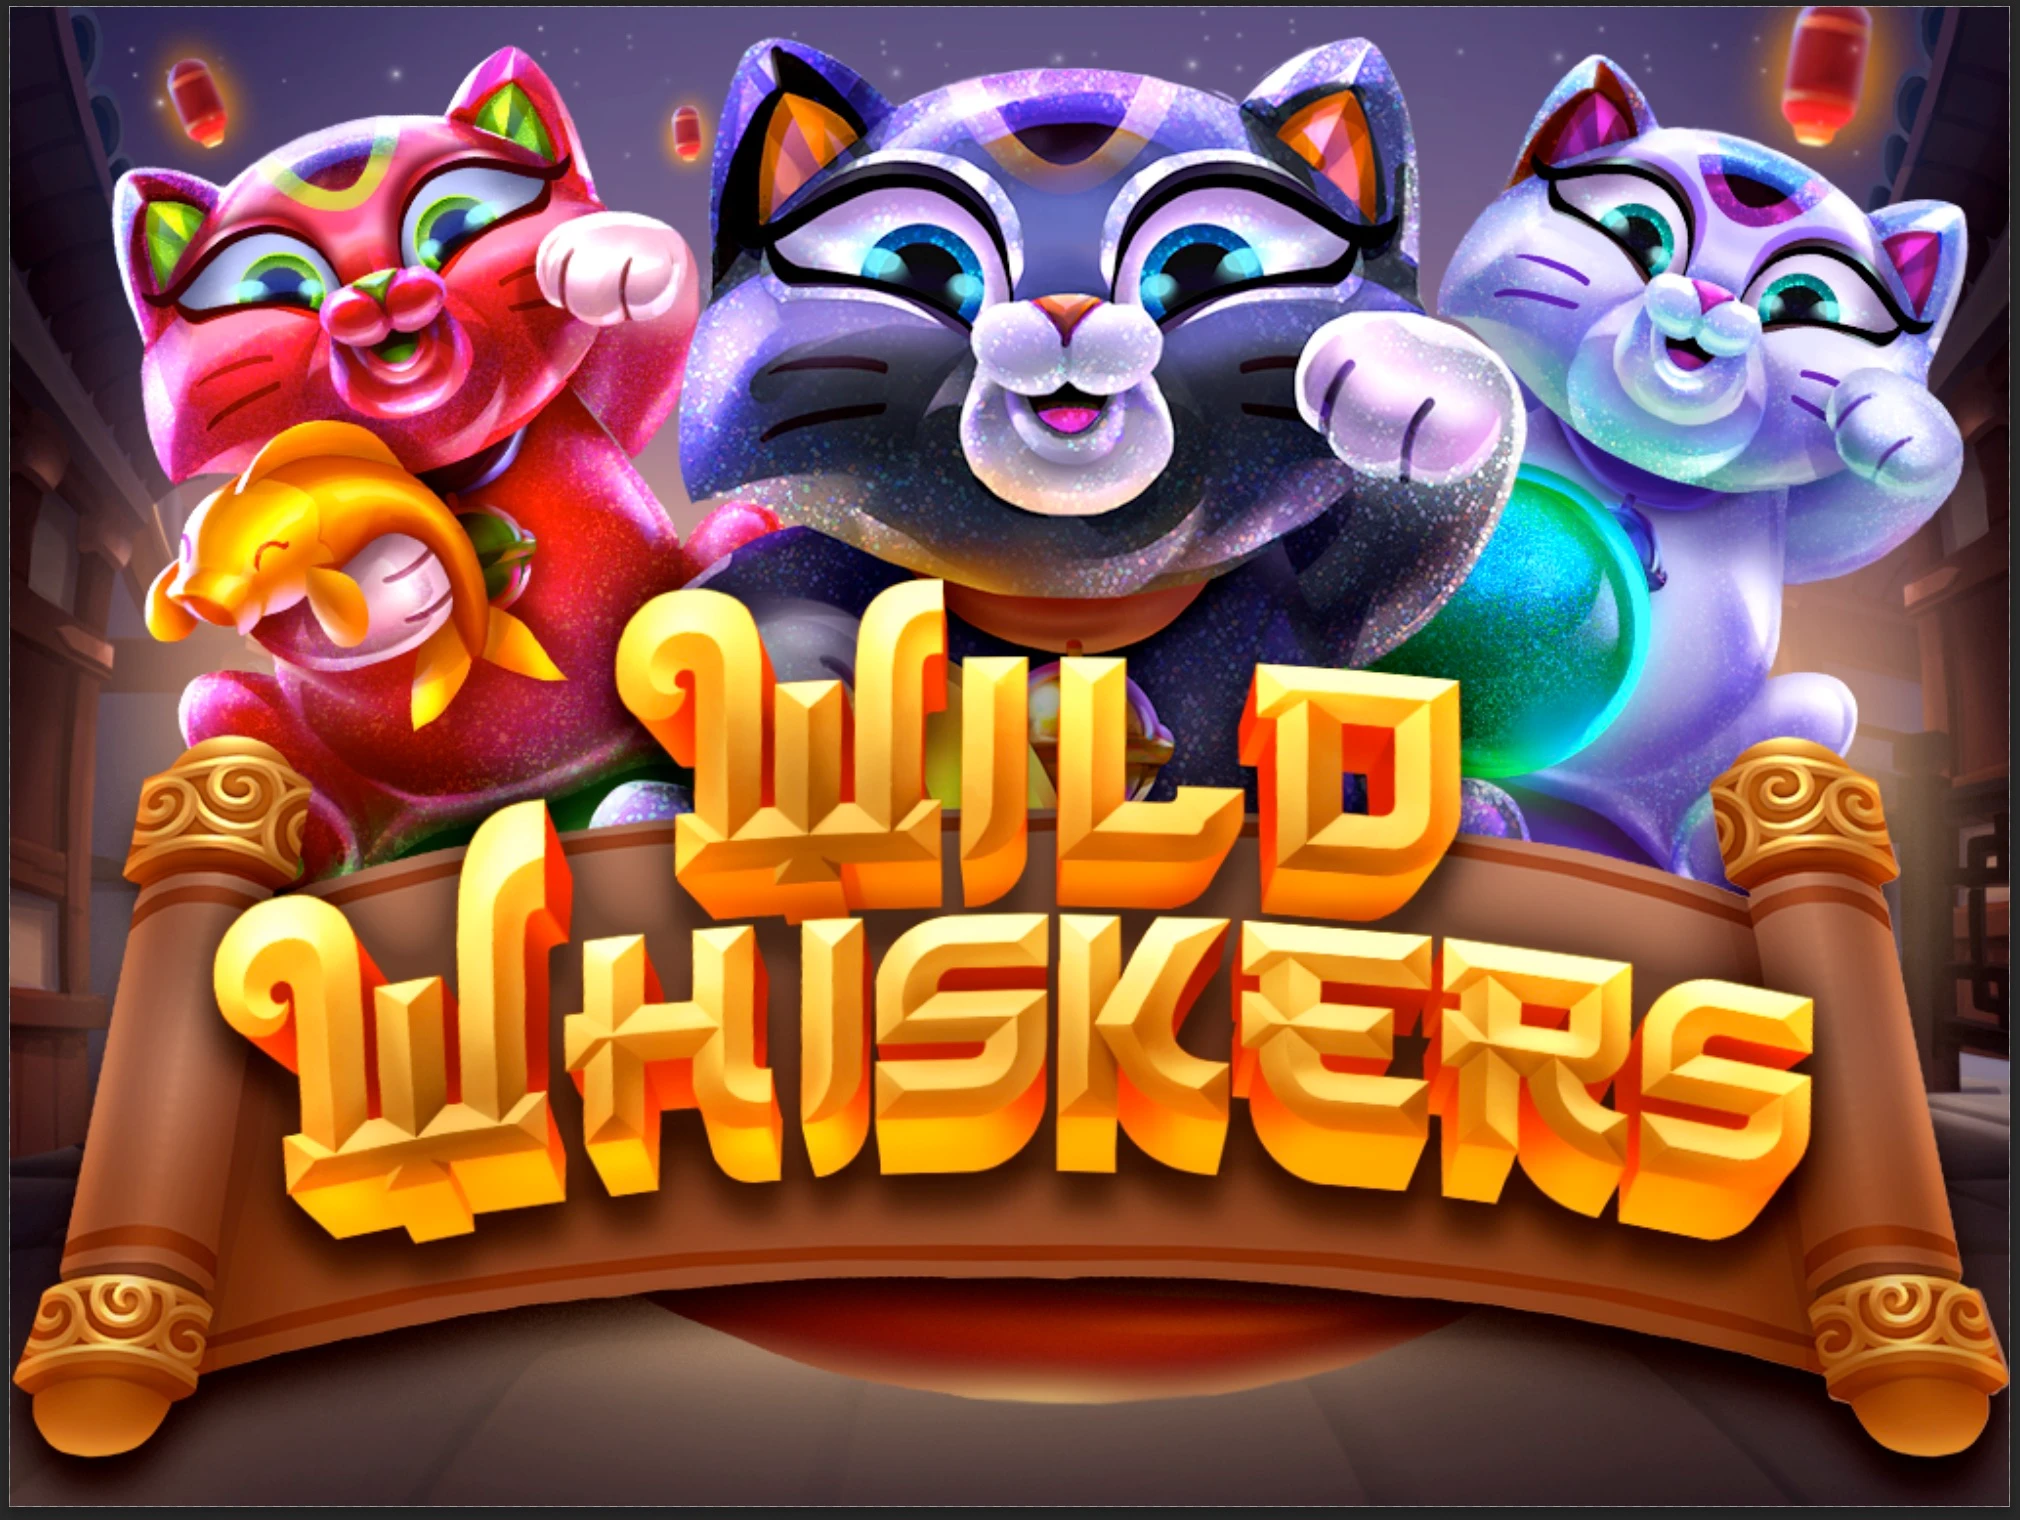 The Japanese cat-themed jackpot slots game Wild Whiskers logo features three Japanese Maneki-neko lucky cats.